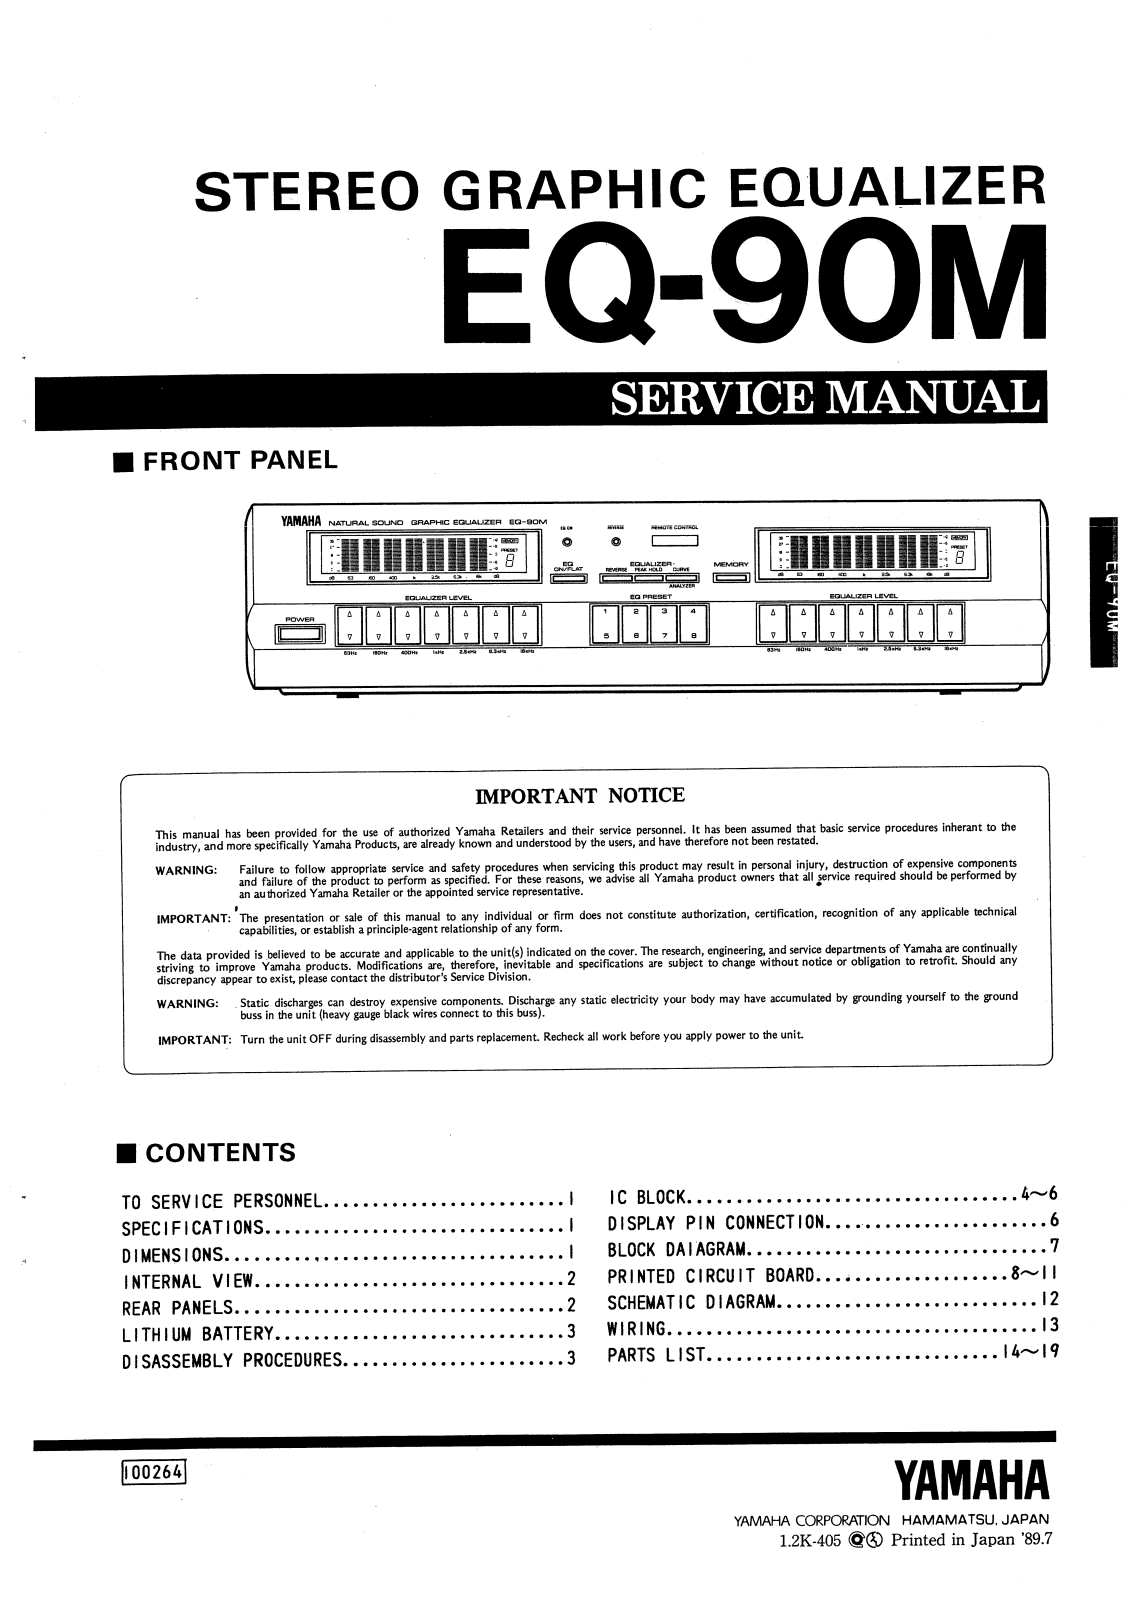 Yamaha EQ-90-M Service Manual